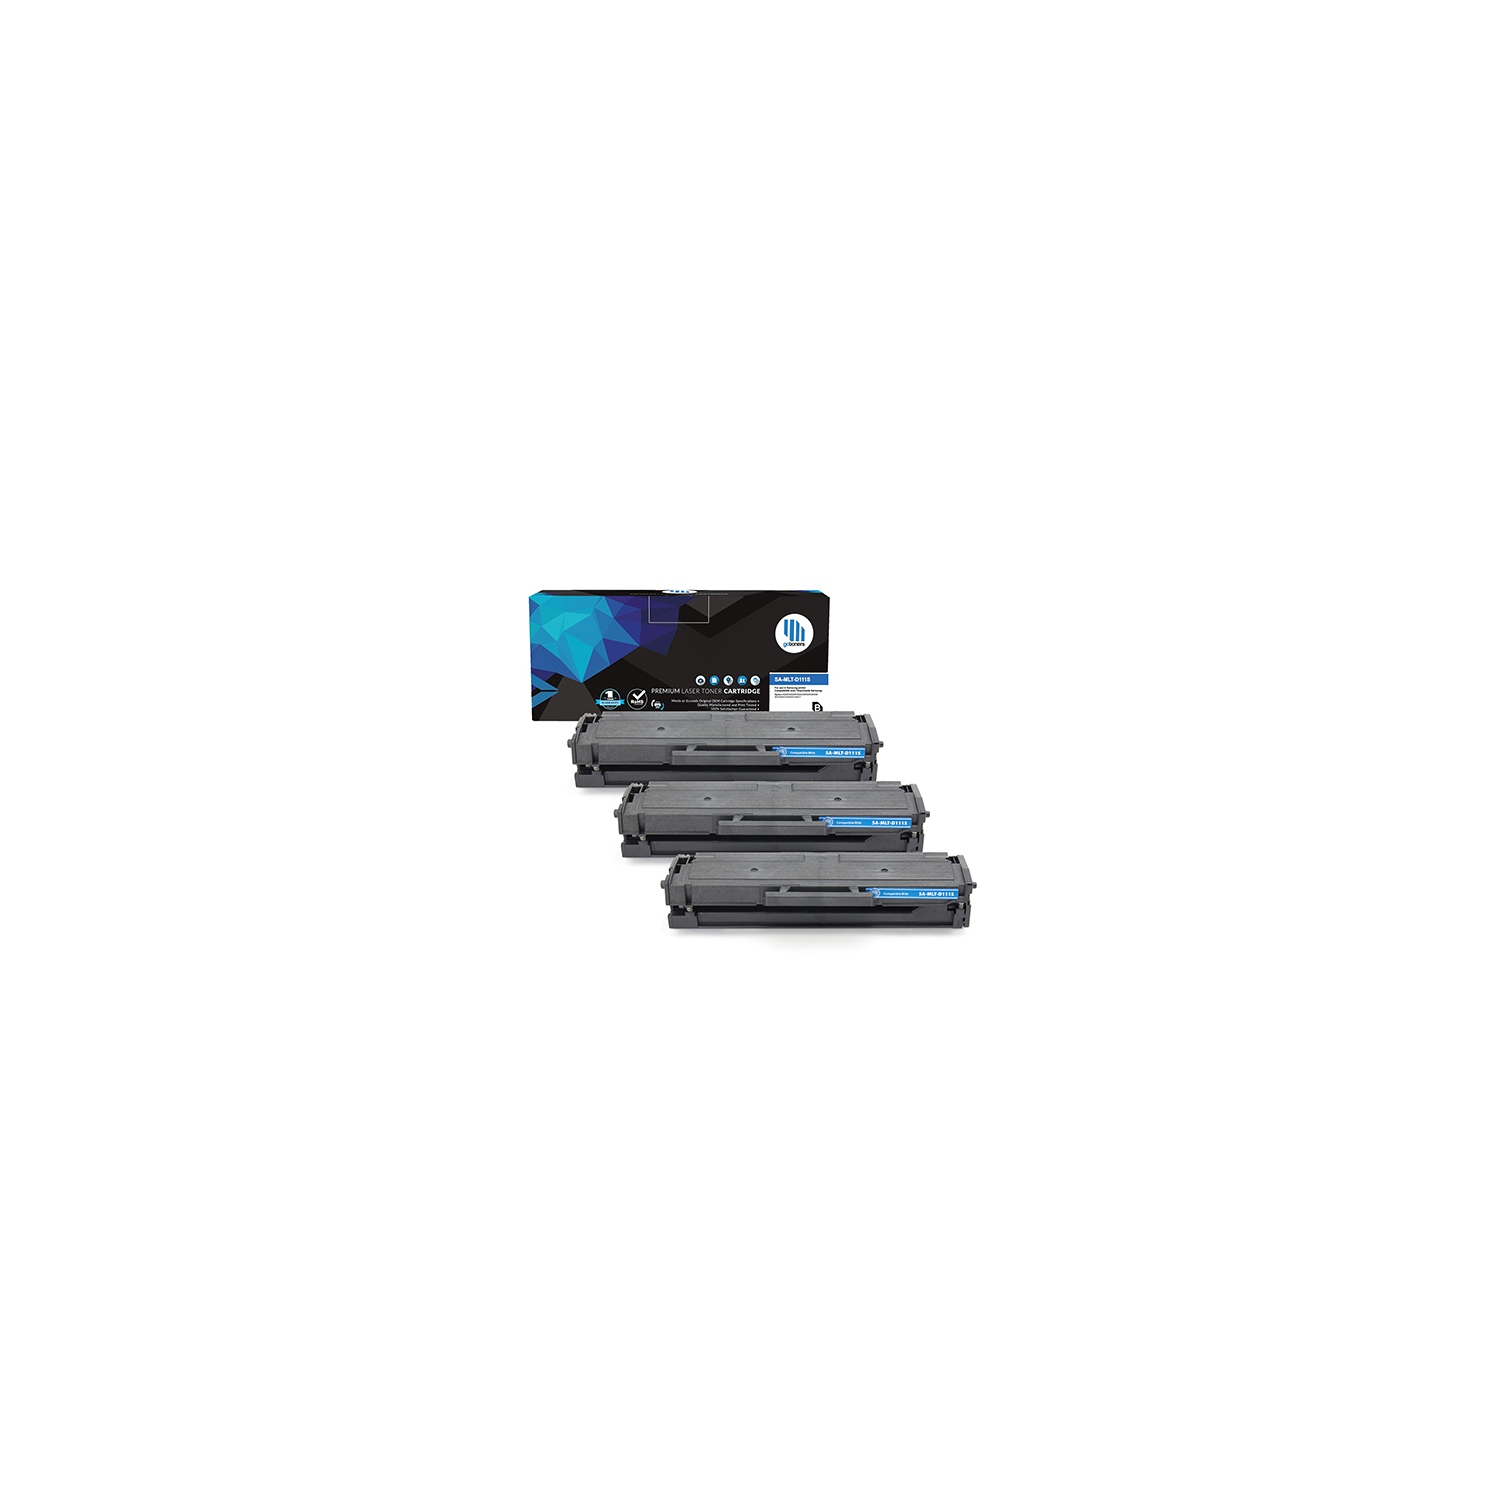 Gotoners™ 3PK Samsung New Compatible MLT-D111S Standard Yield Black Toner Cartridge For Xpress SL-M2020W/M2022/M2022W/M2070/M2070FW